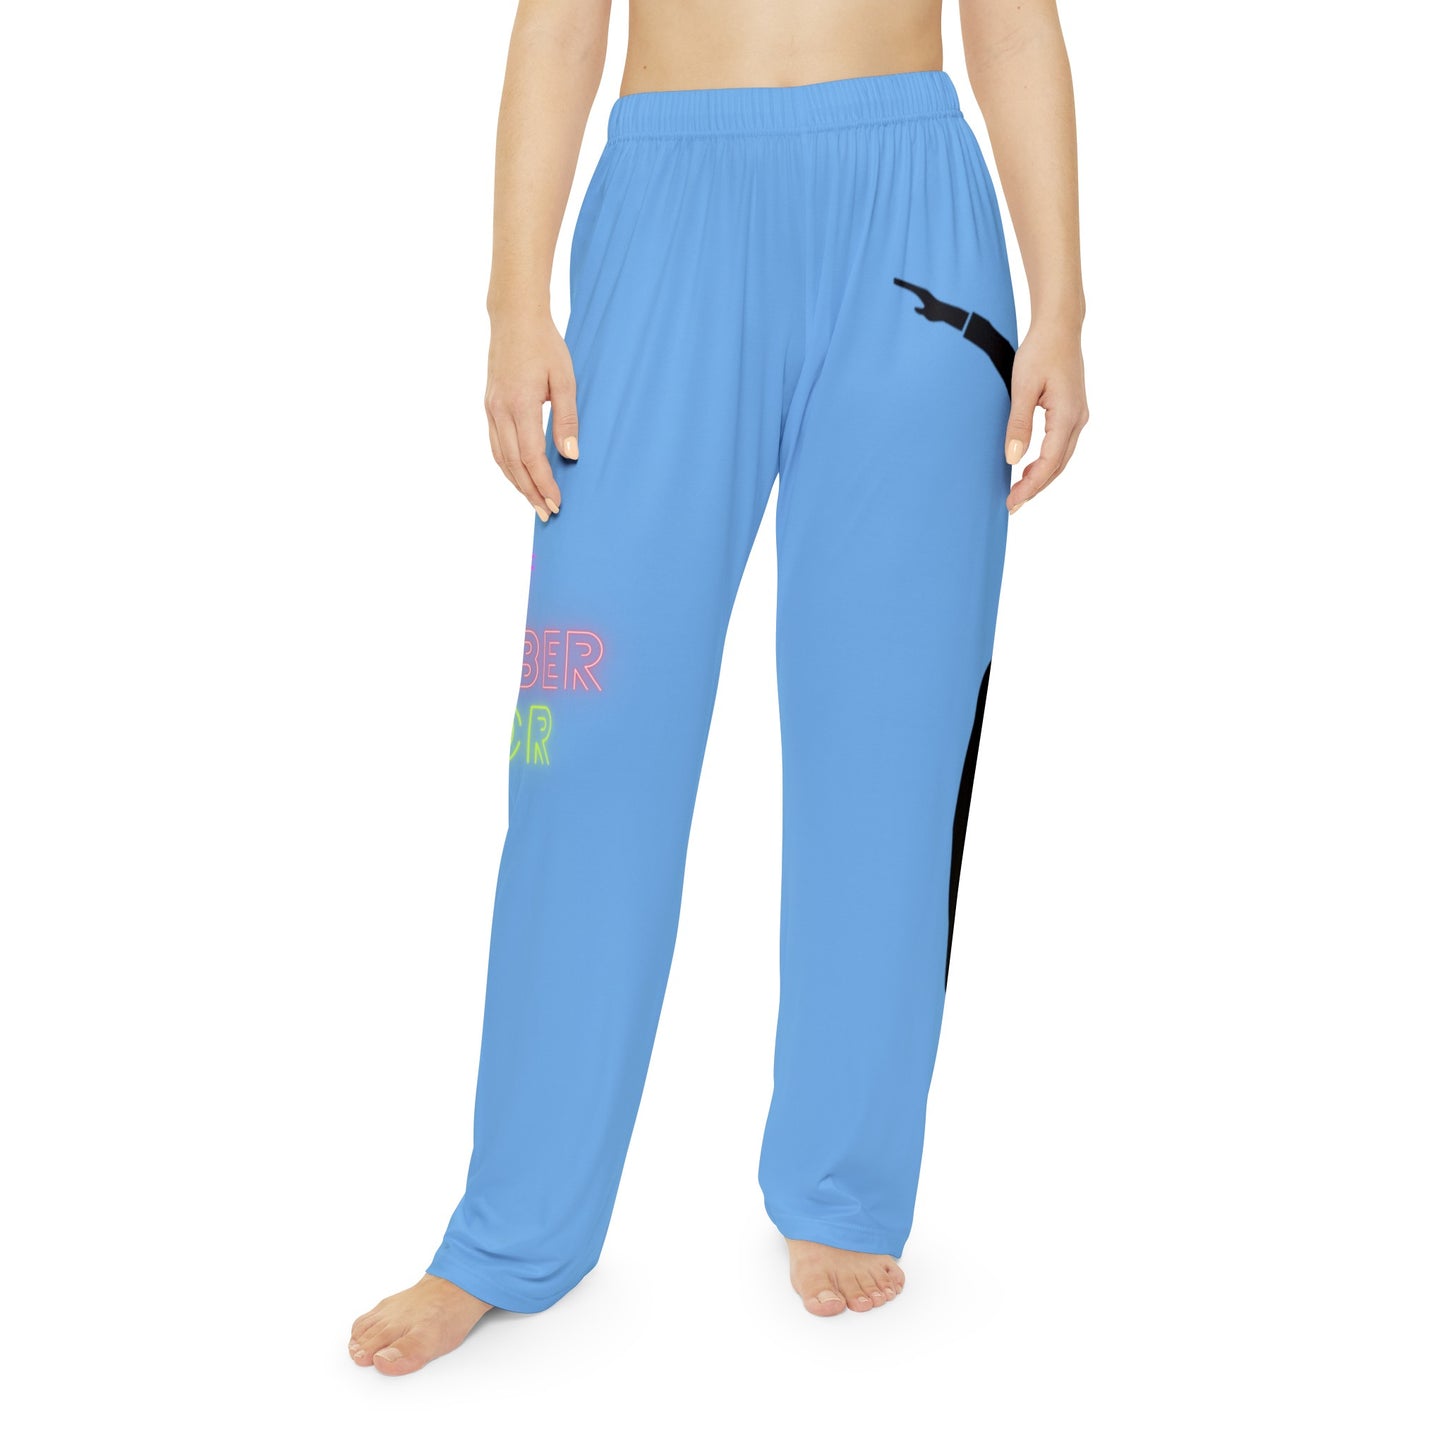 Women's Pajama Pants: Dance Lite Blue